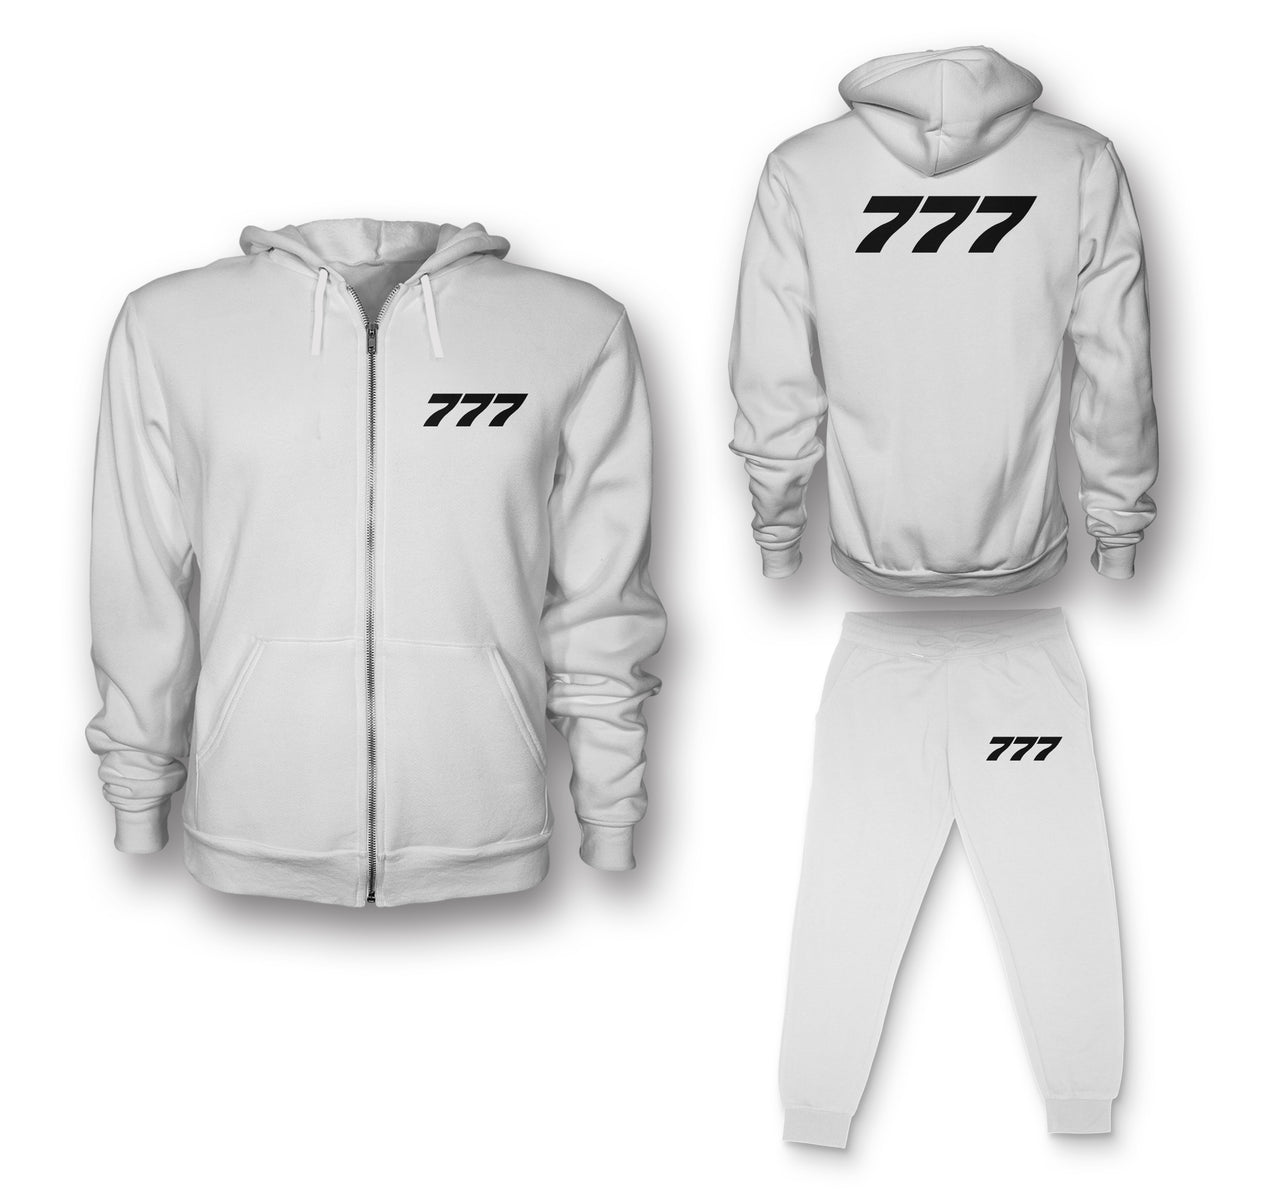 777 Flat Text Designed Zipped Hoodies & Sweatpants Set